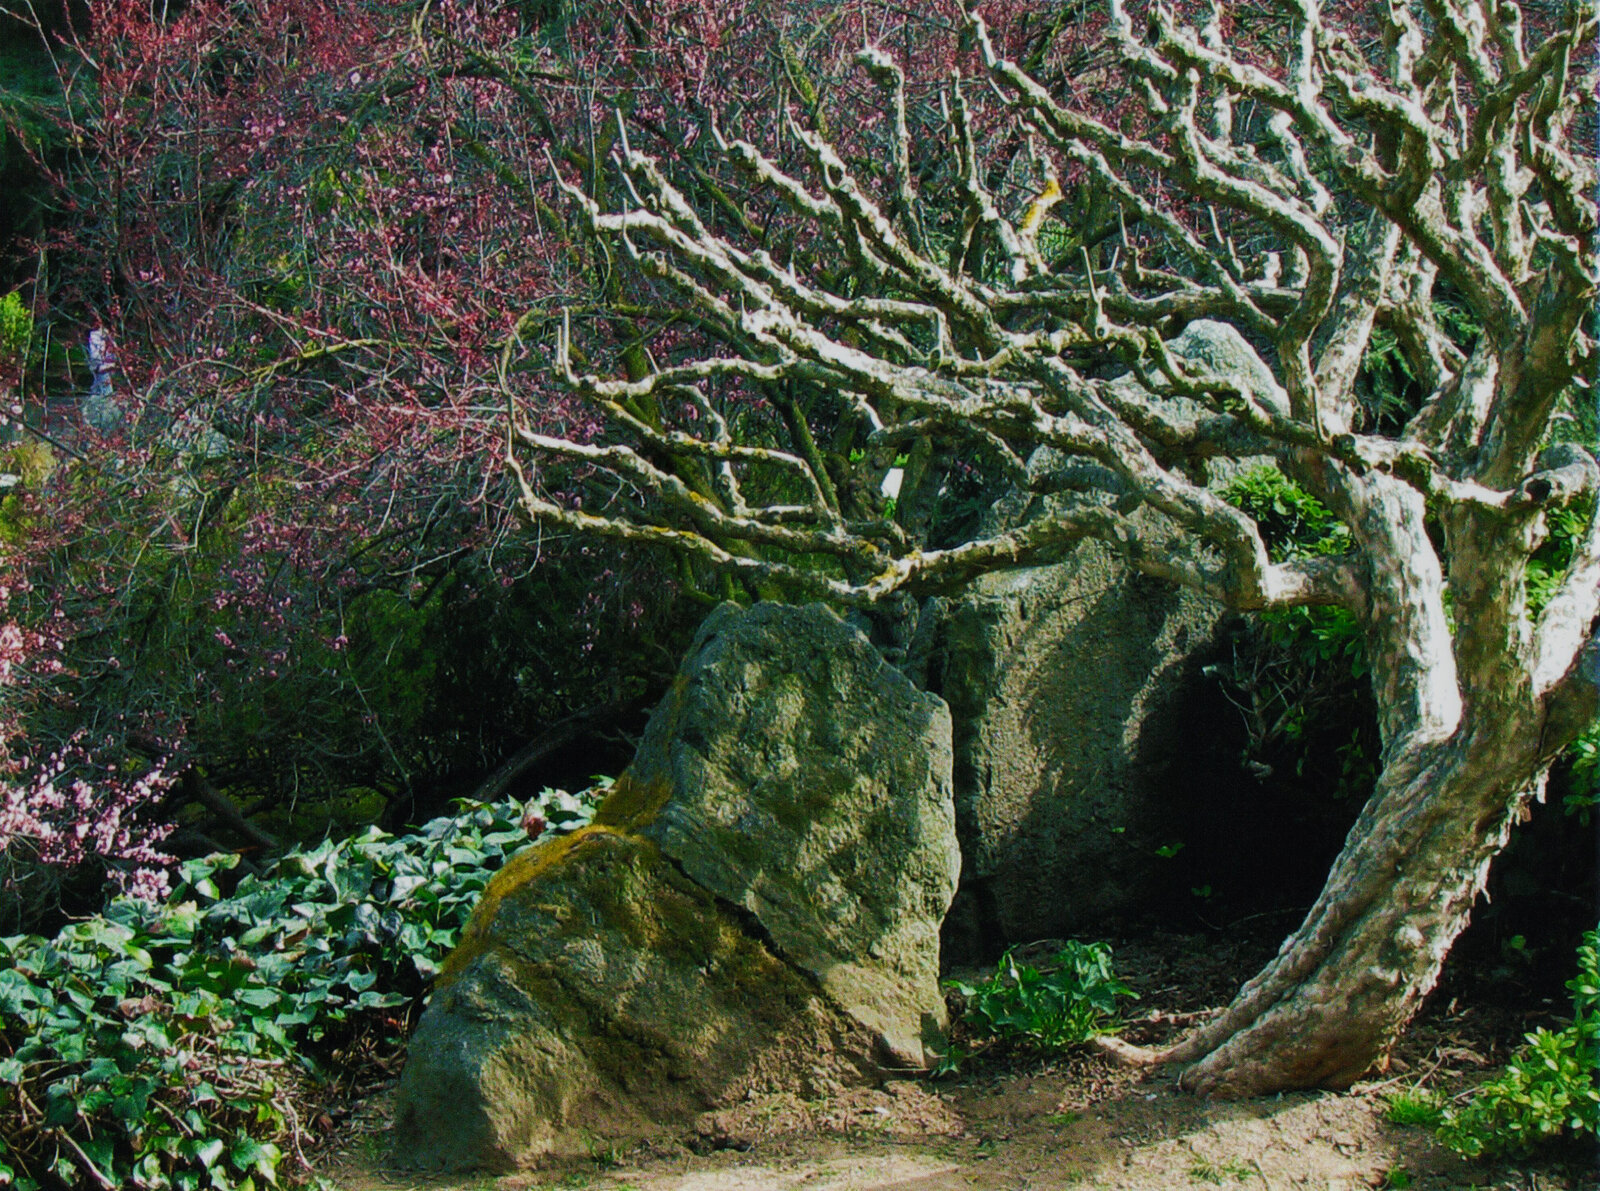 "Vortex" - a scene from the San Jose Japanese Gardens